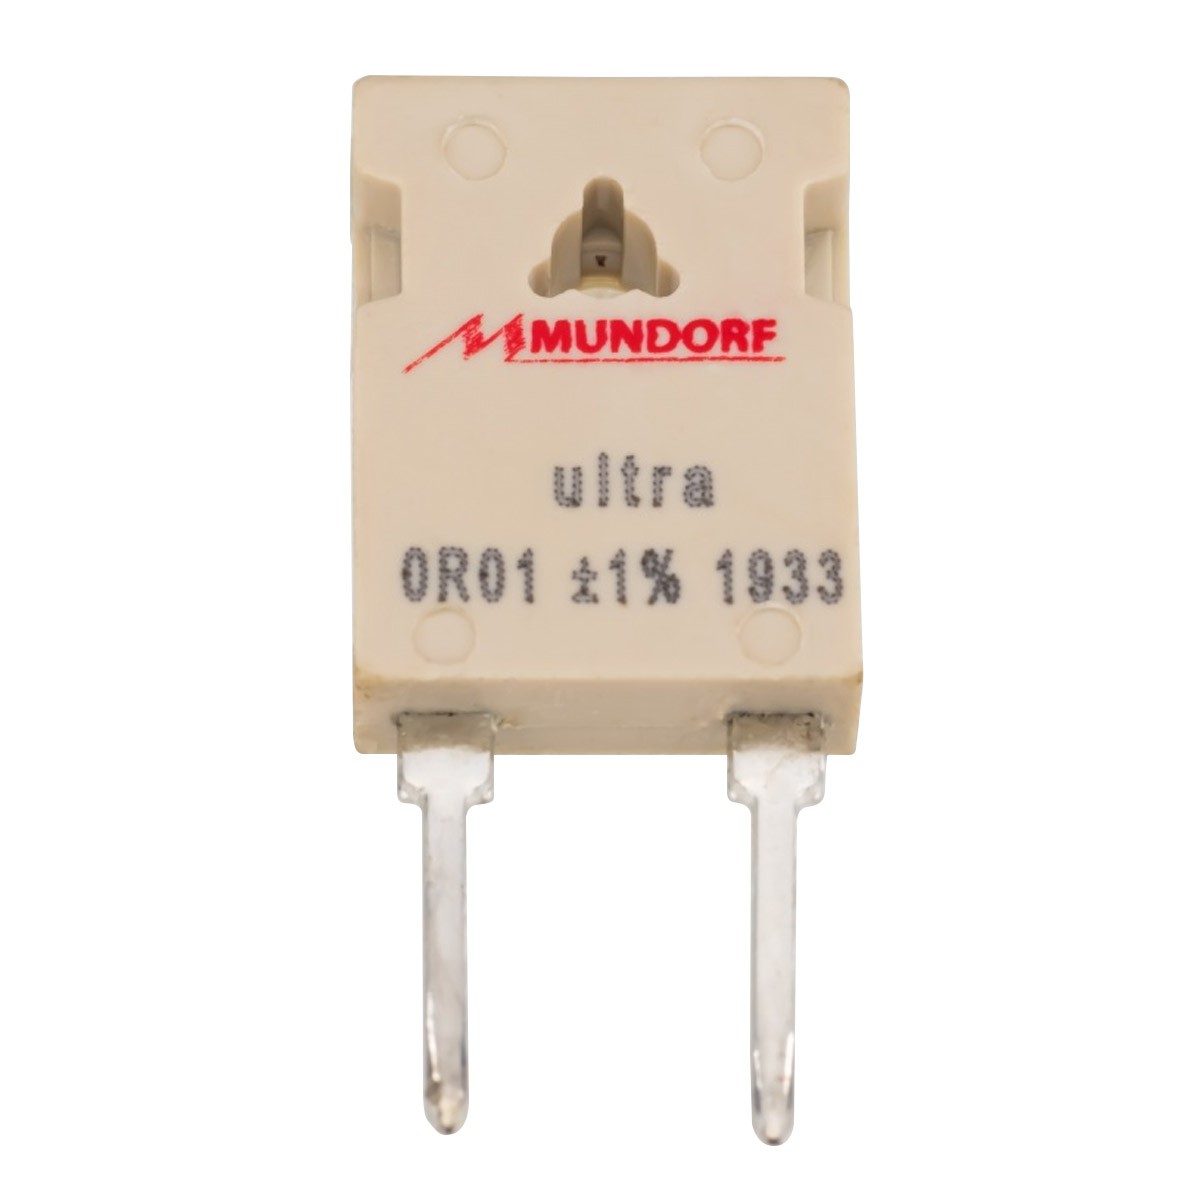 MUNDORF MRESIST ULTRA Resistor 30W 33 Ohm